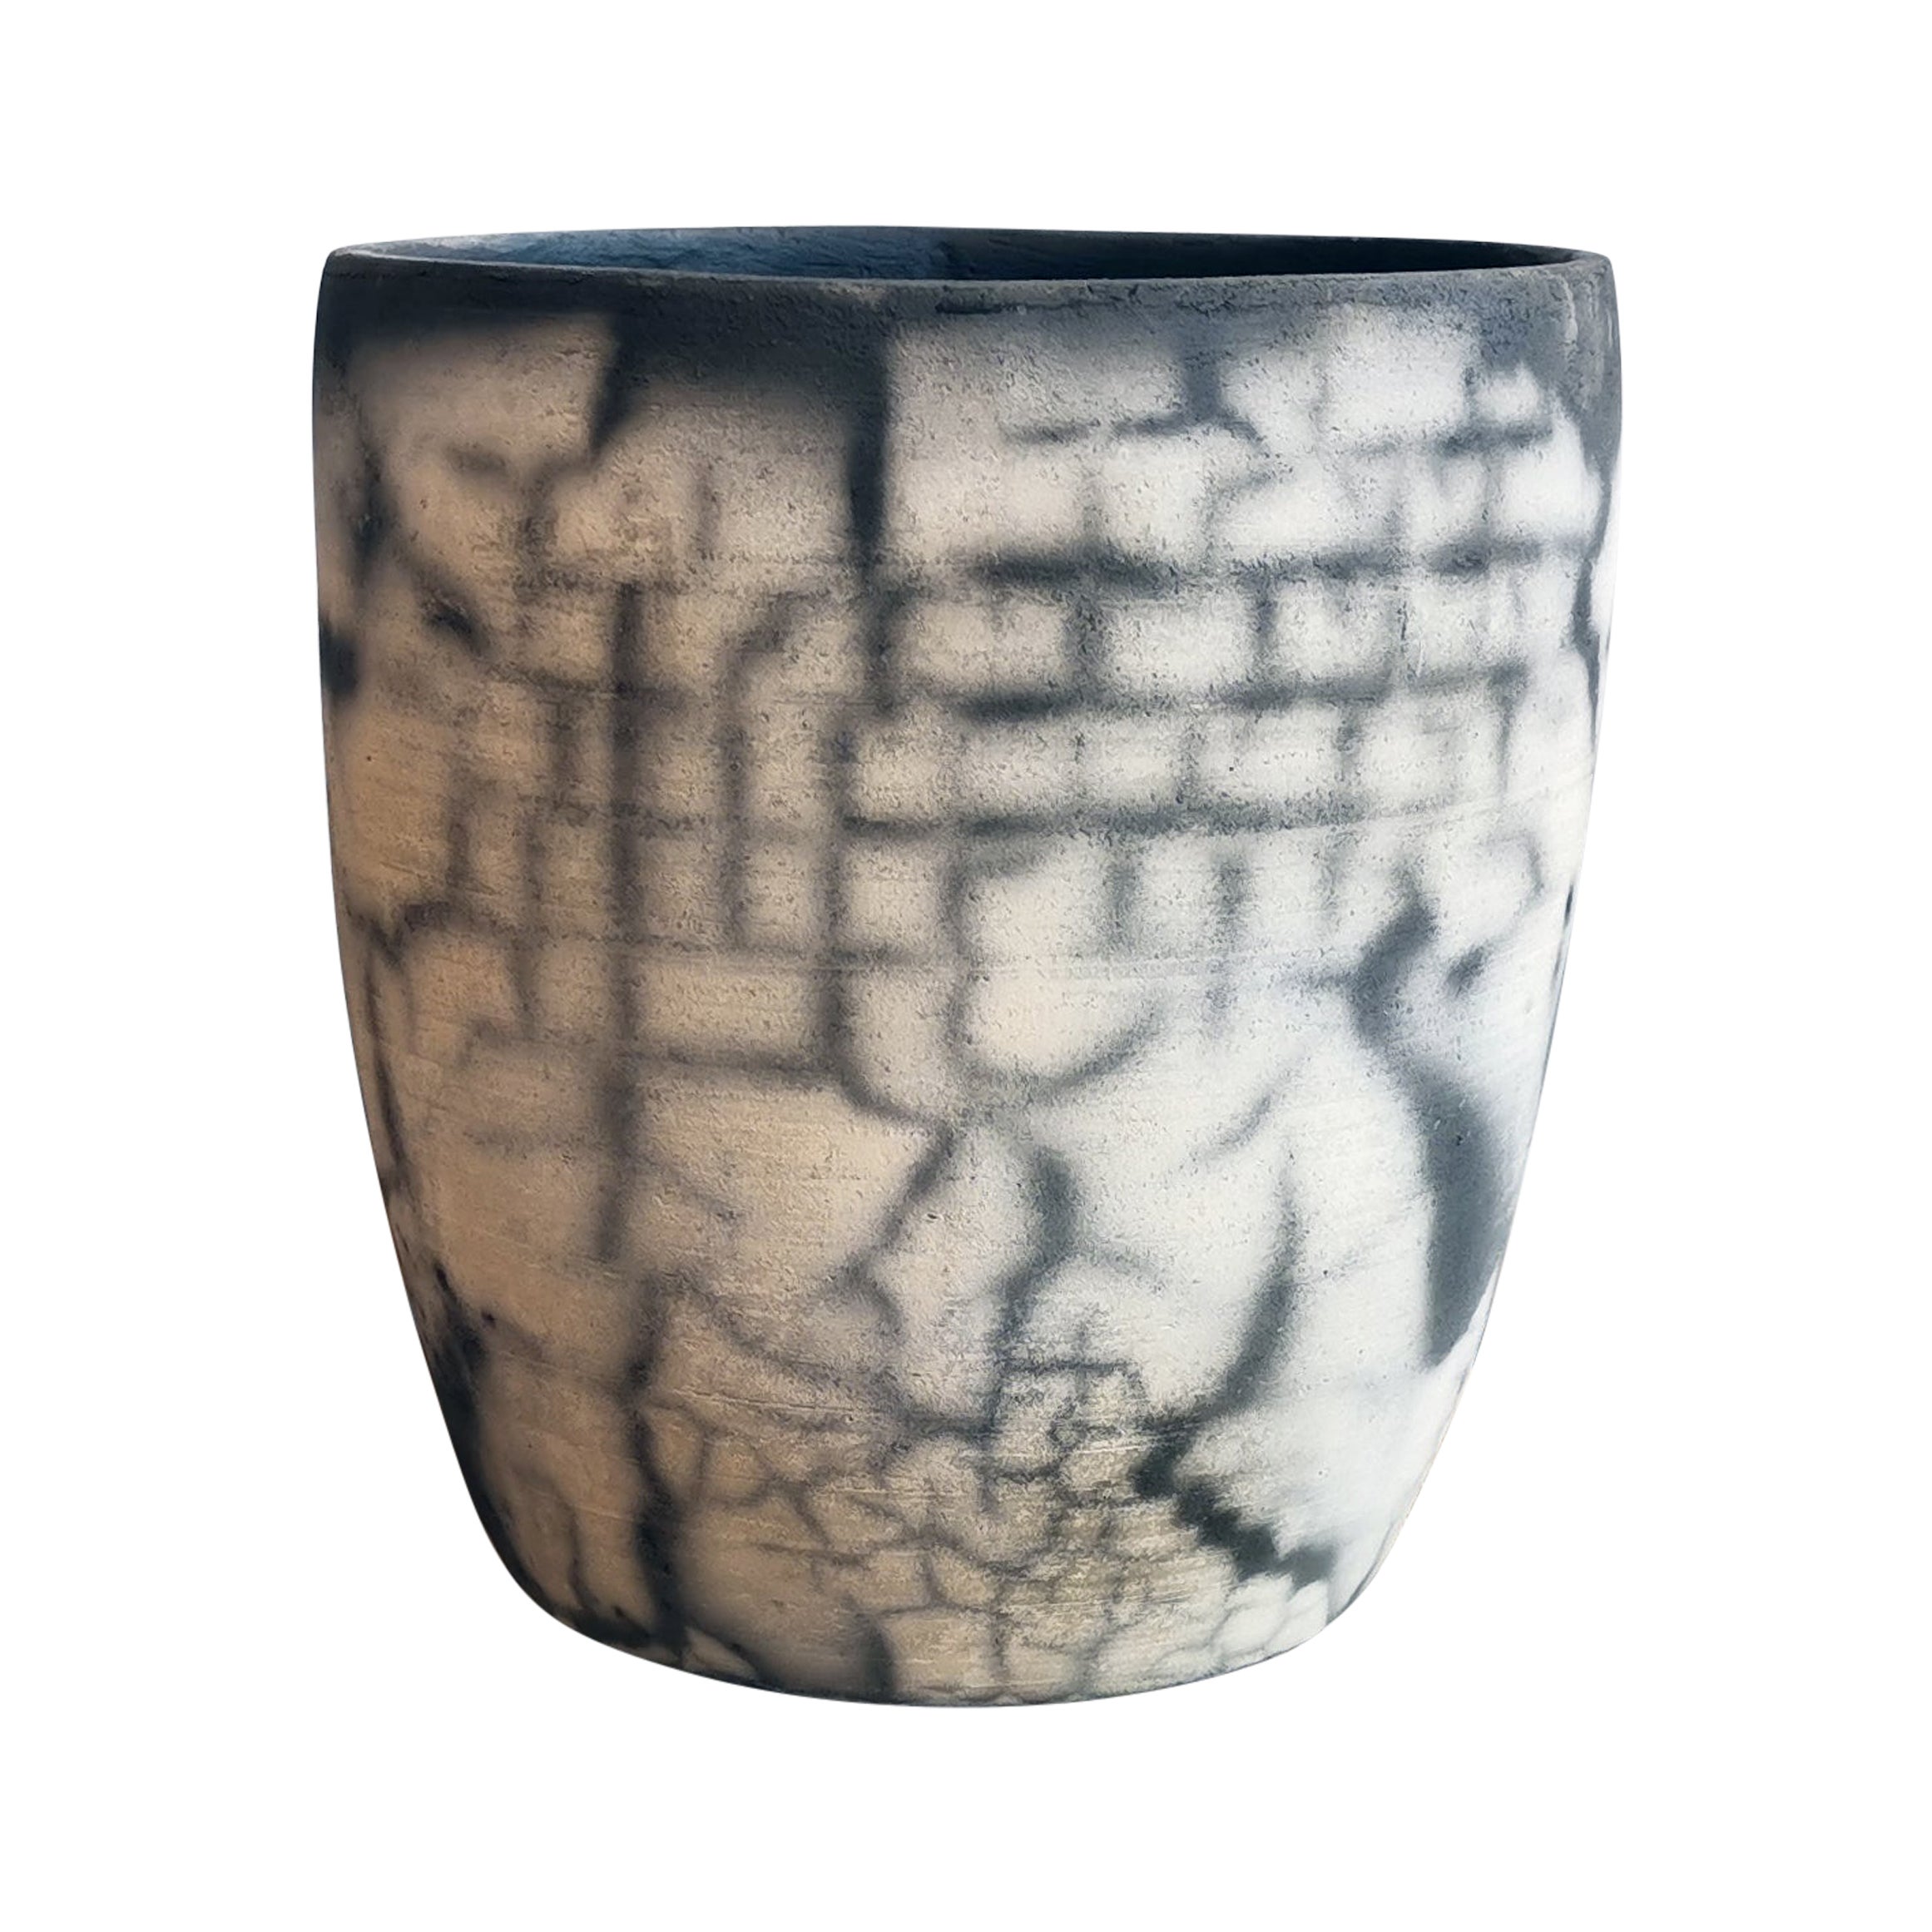 Seicho Raku Planter Pot Pottery - Smoked Raku - Handmade Ceramic For Sale